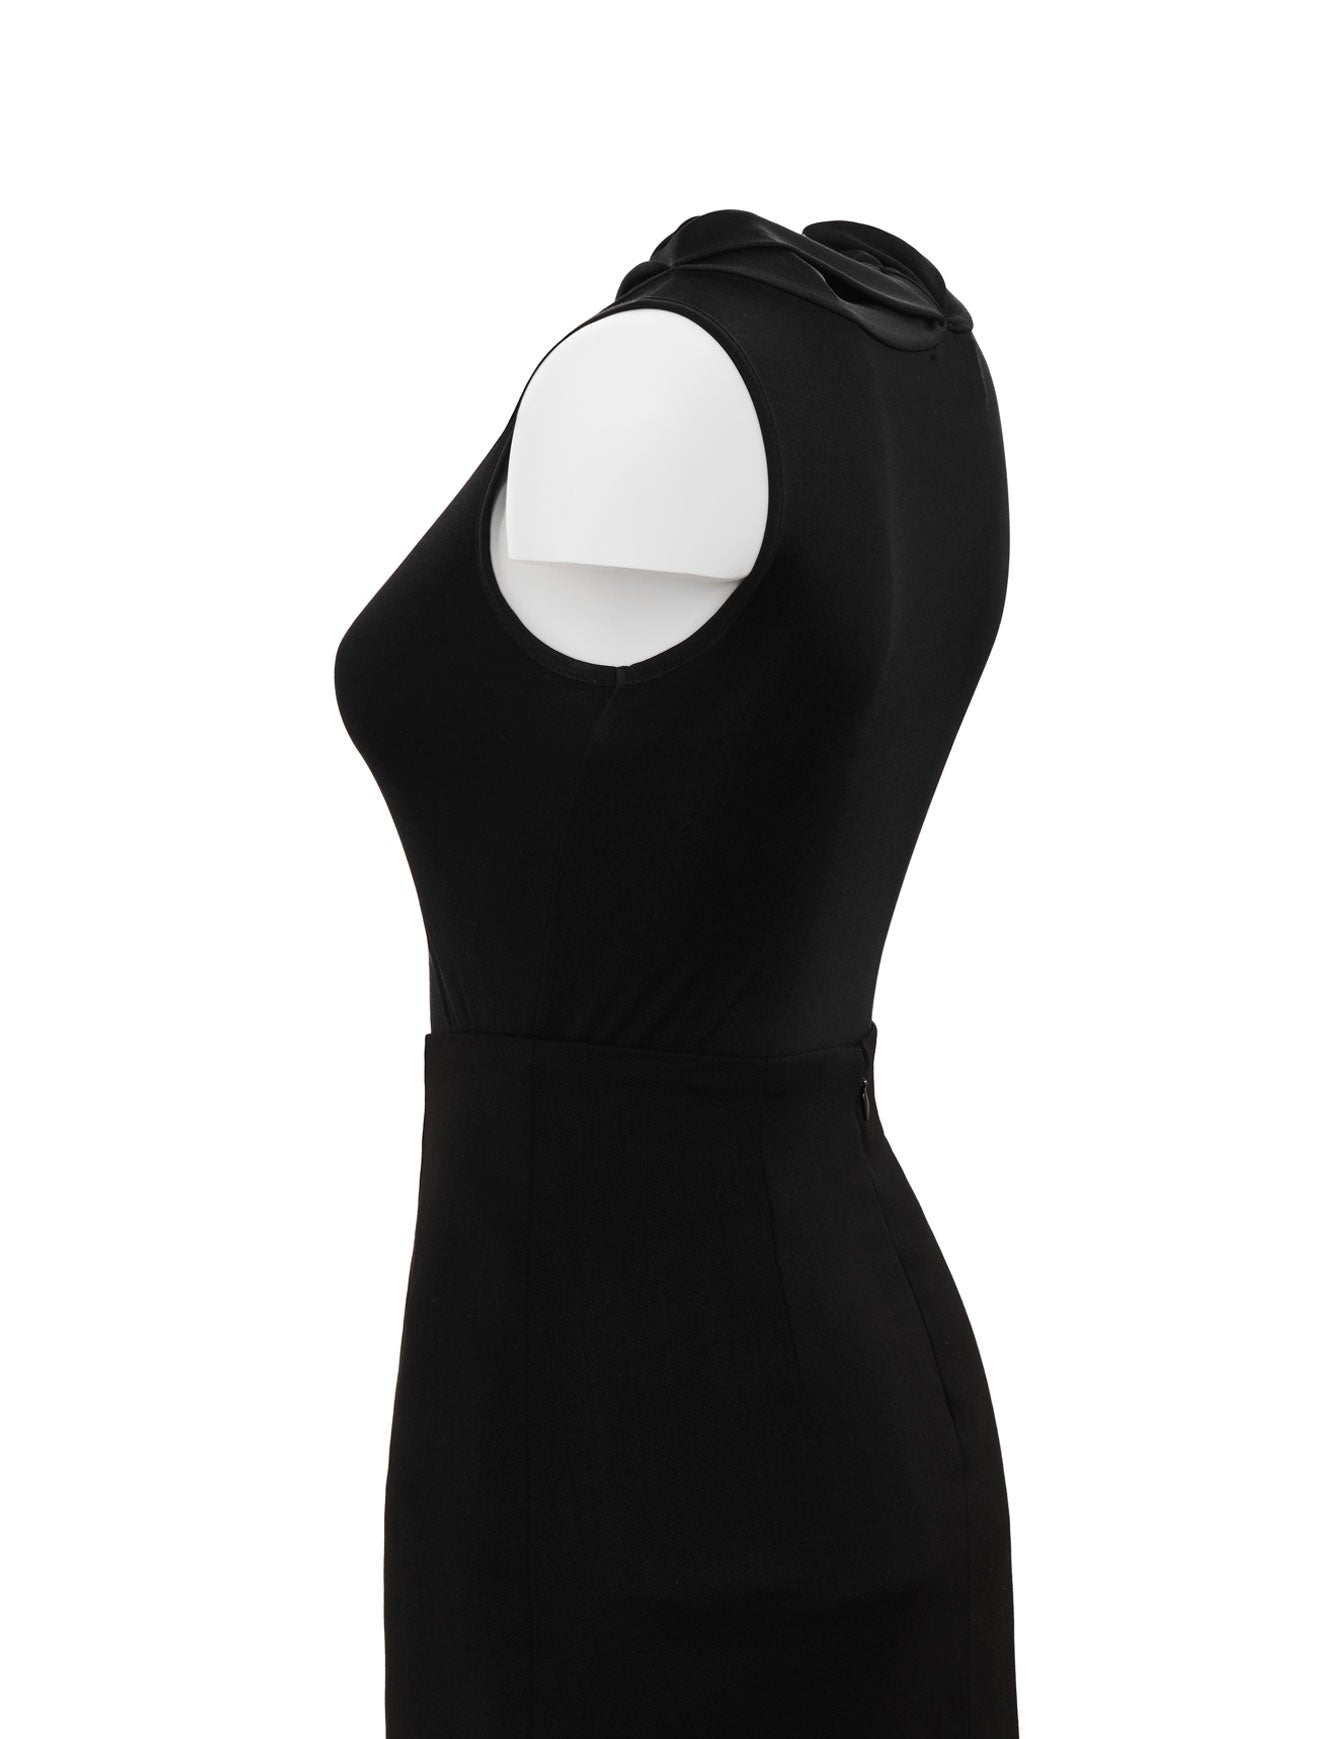 Luxe Finish Sleeveless Silk Tee Shirt — The Audrey IV - Senza Tempo Fashion